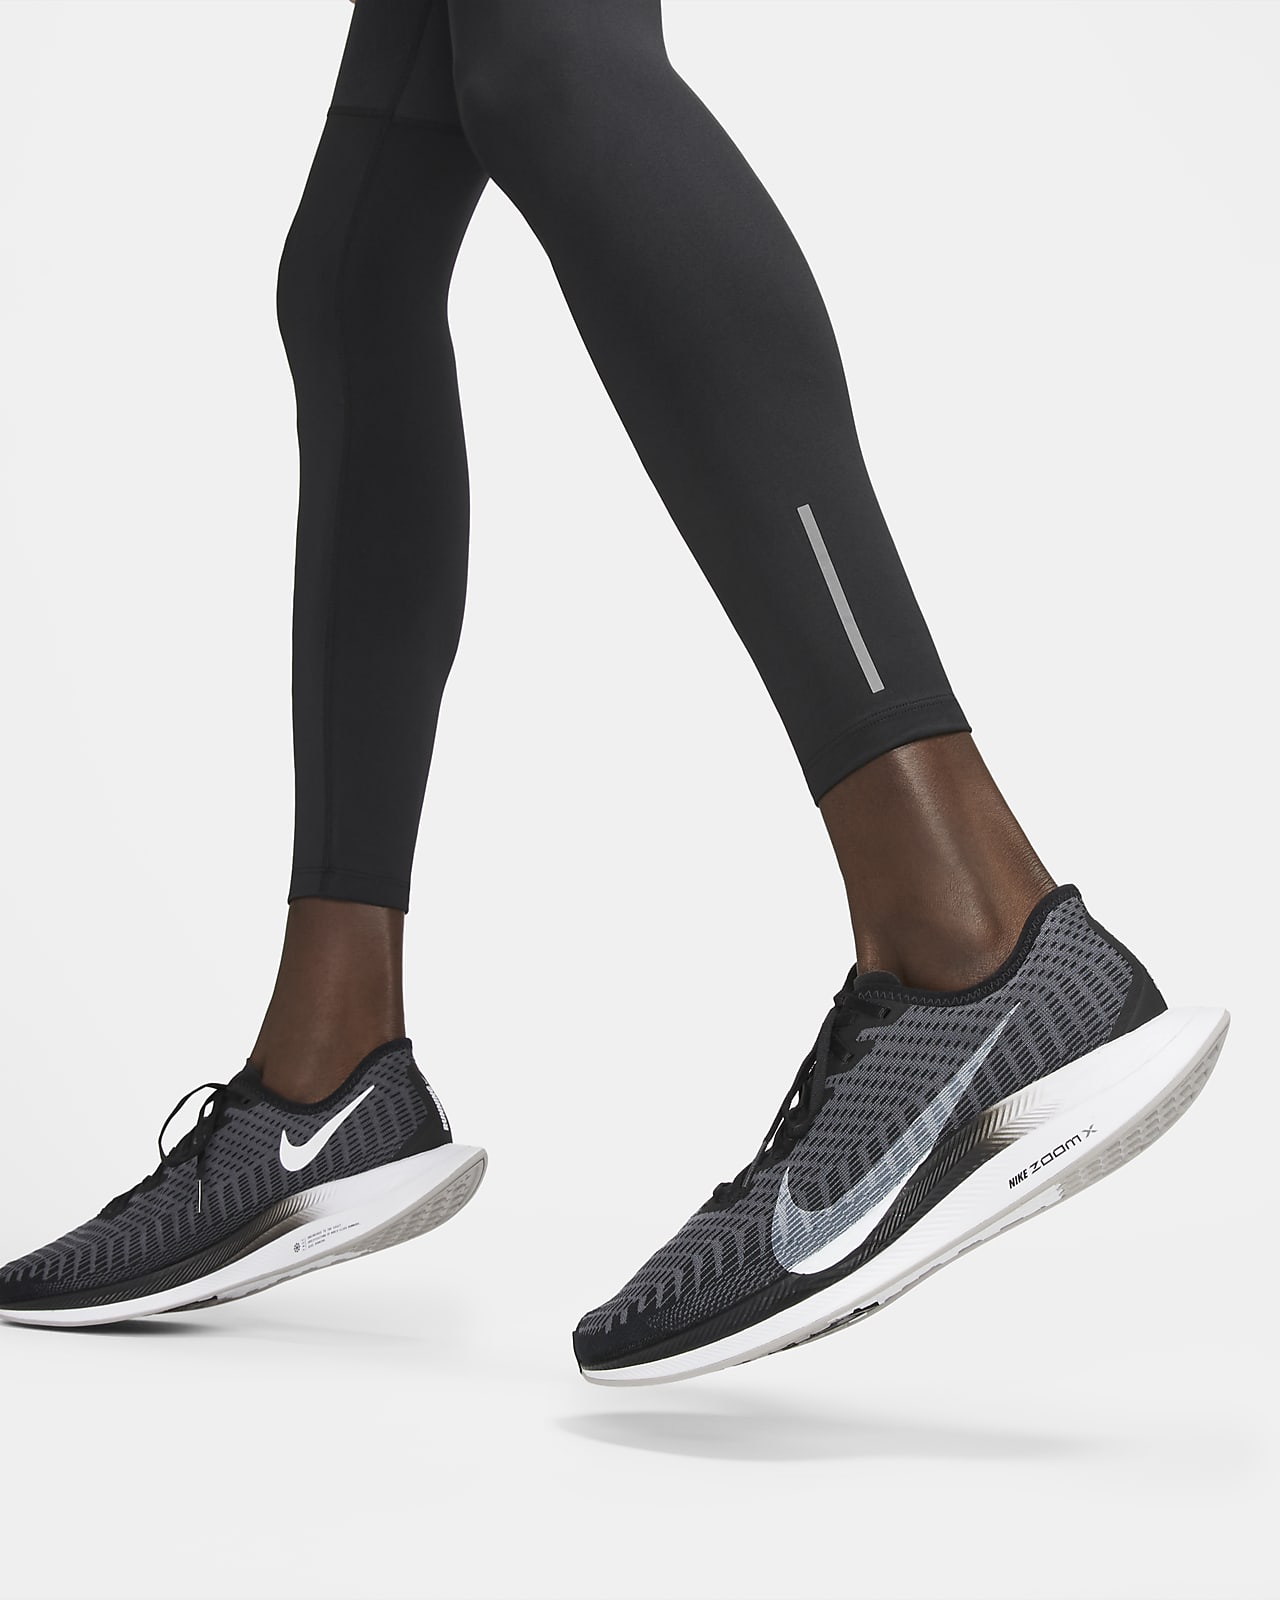 Nike One Womens Power Flash Running Tights CN9880-010 Black-Sizes M, L, or  XL